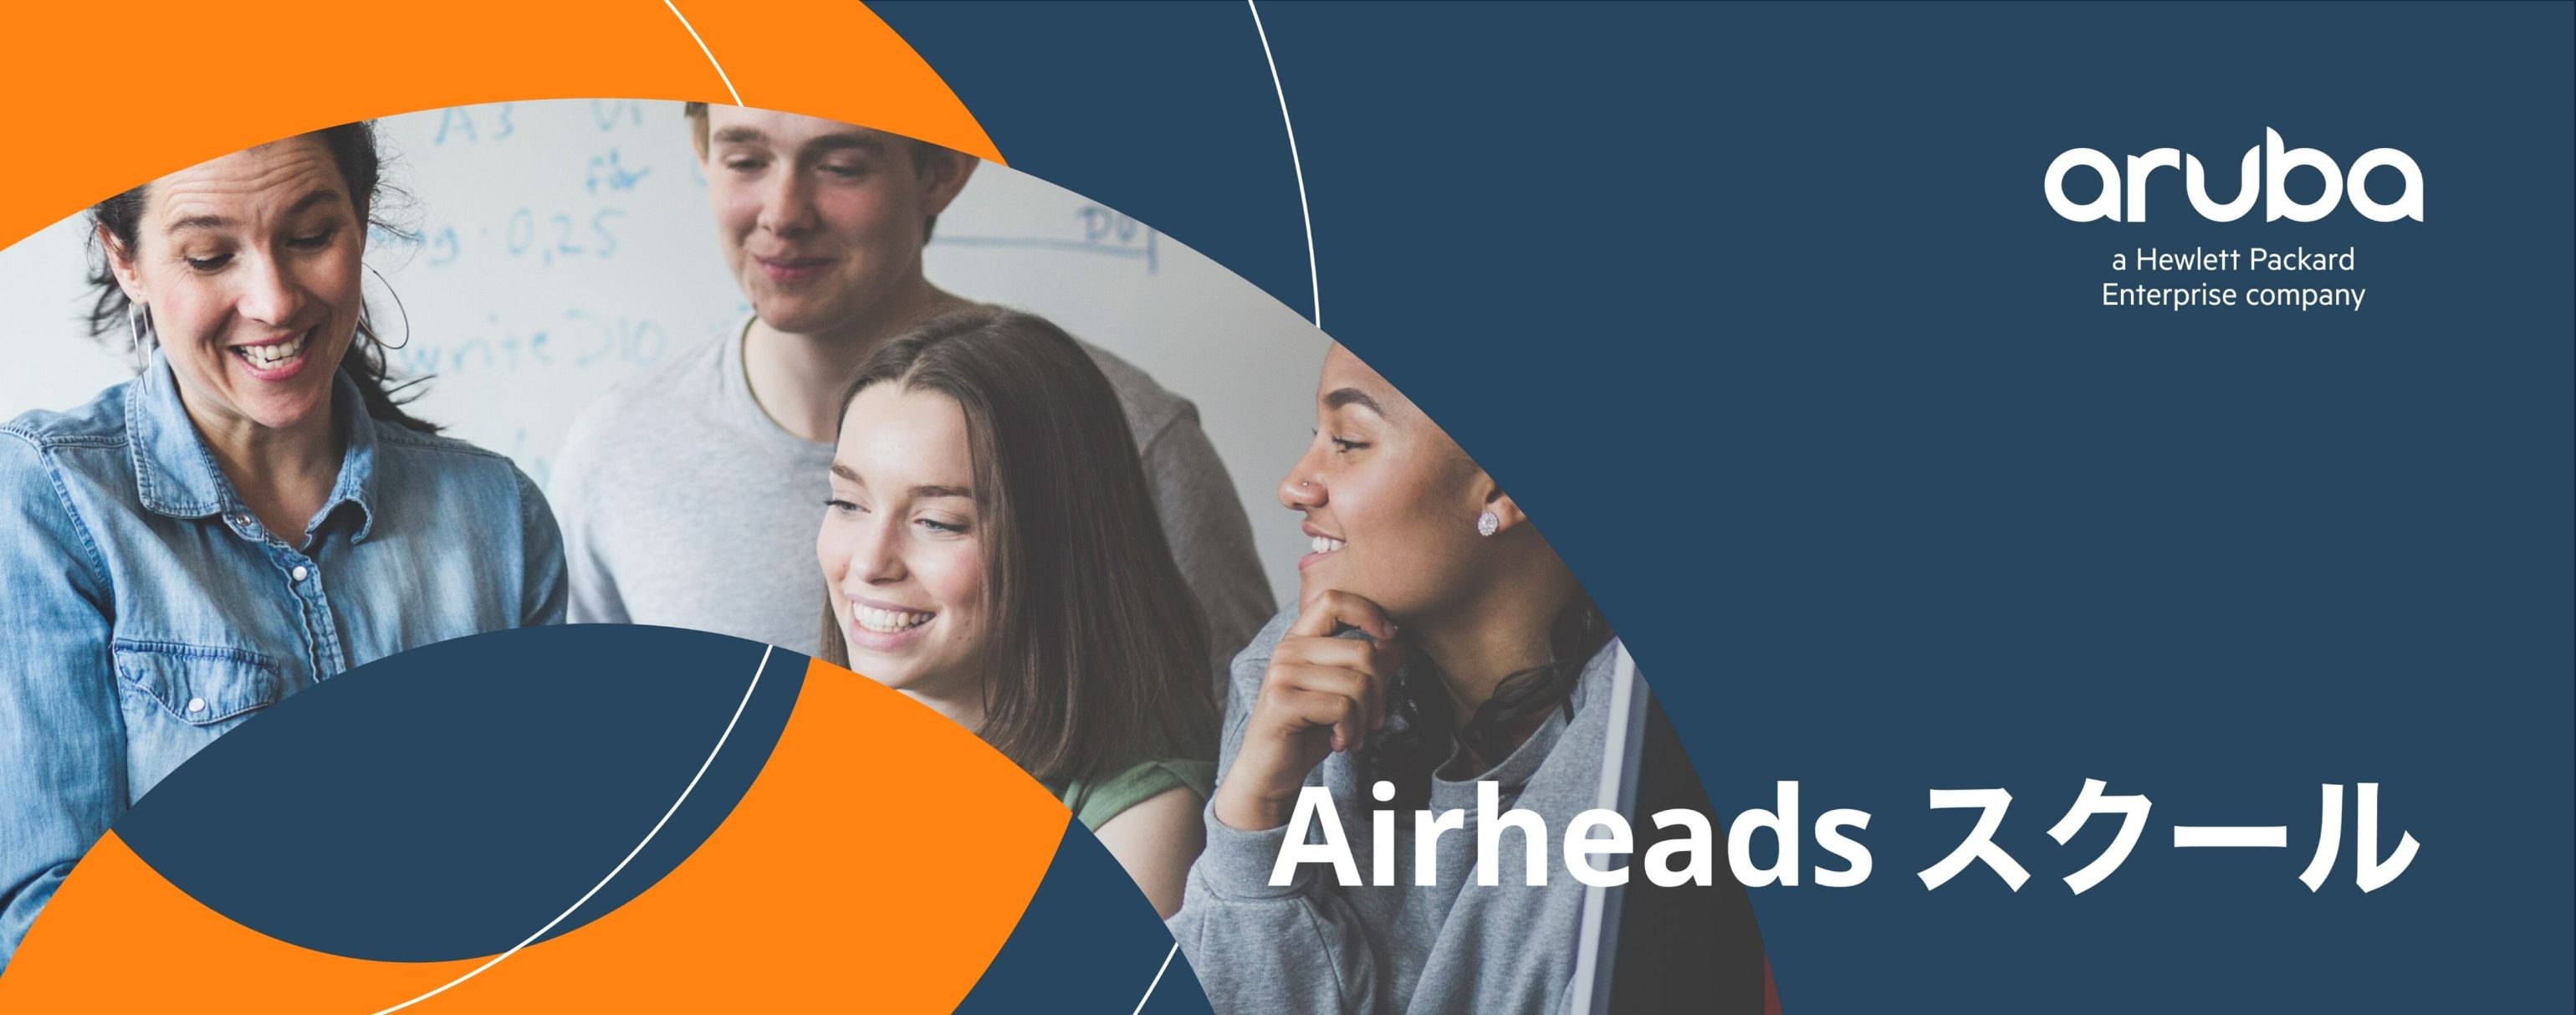 Airheads Academy Webinar